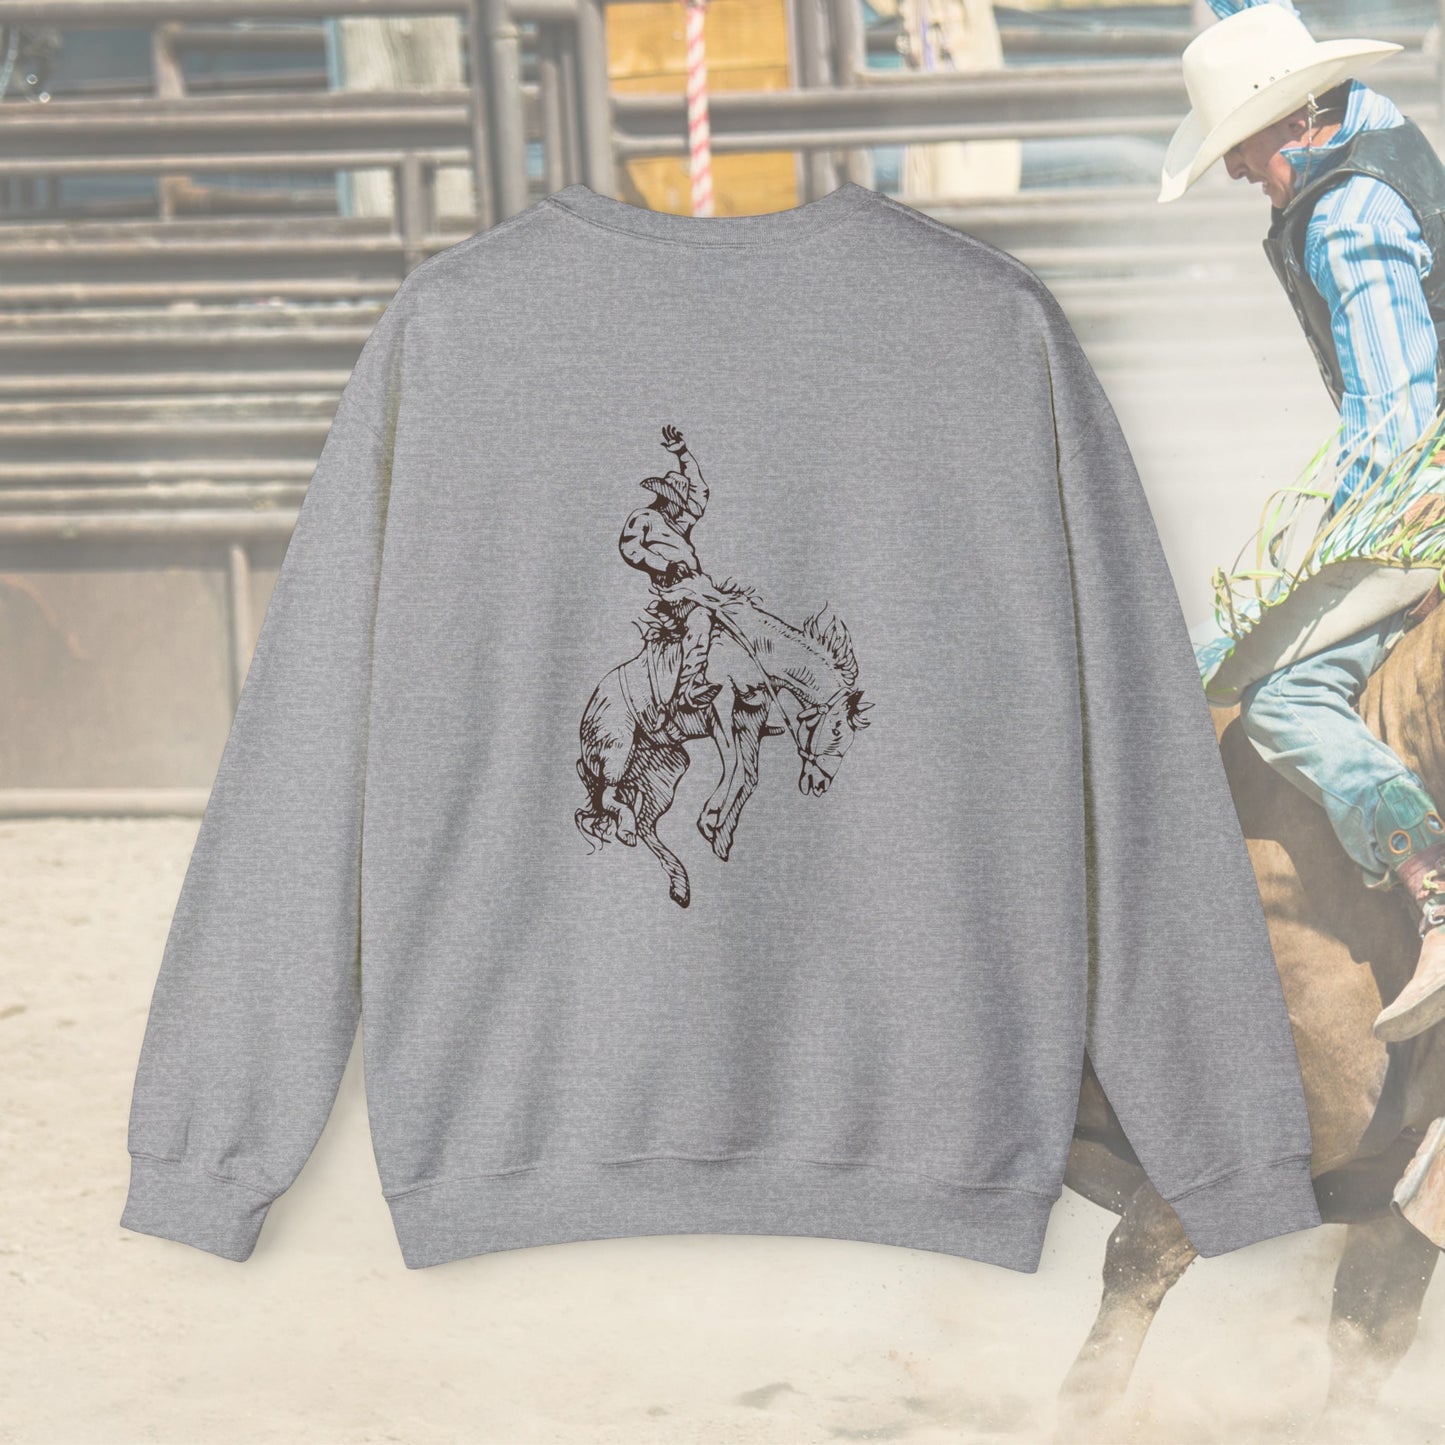 Rodeo Bronc Horses Sweatshirt, Tough Enough Crewneck Shirt, Rodeo Western Tee for Cowboy - FlooredByArt